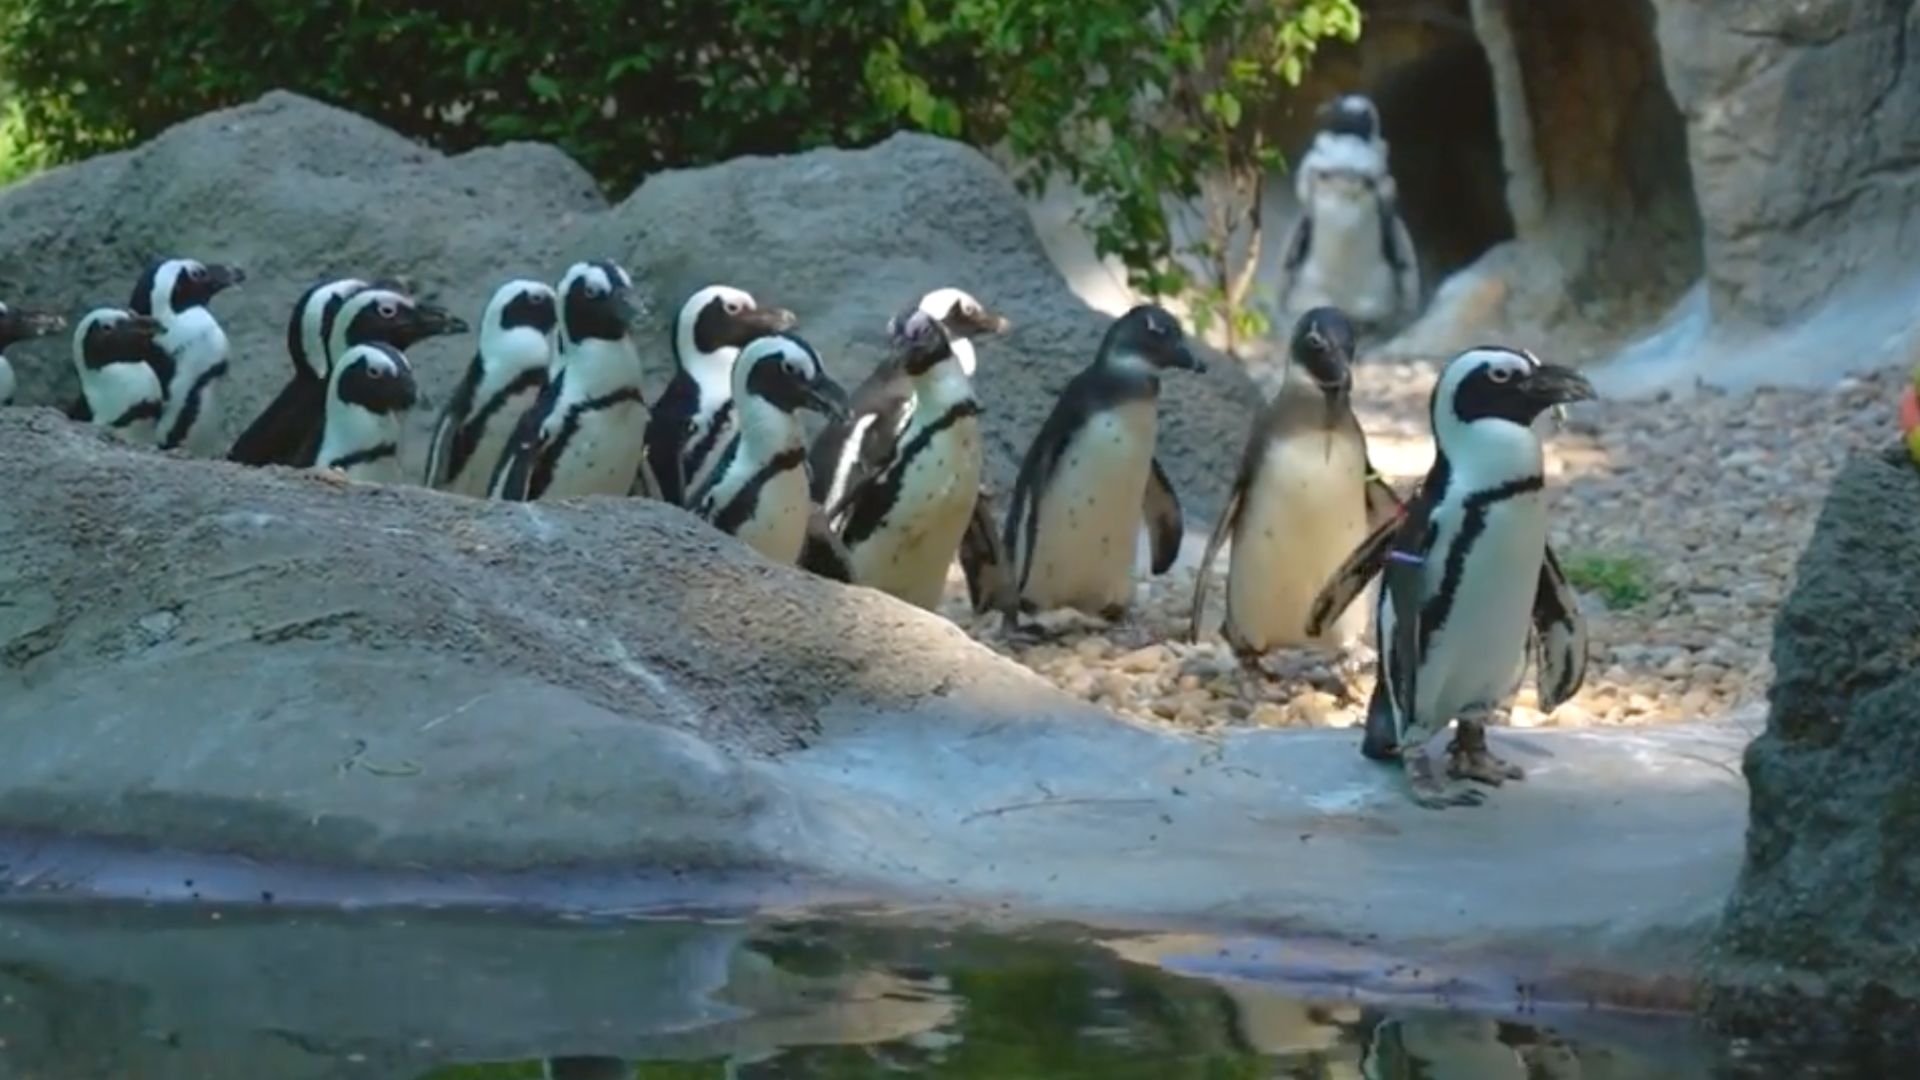 Penguins at the exhibit in Budapest's City Park Zoo, Városliget.